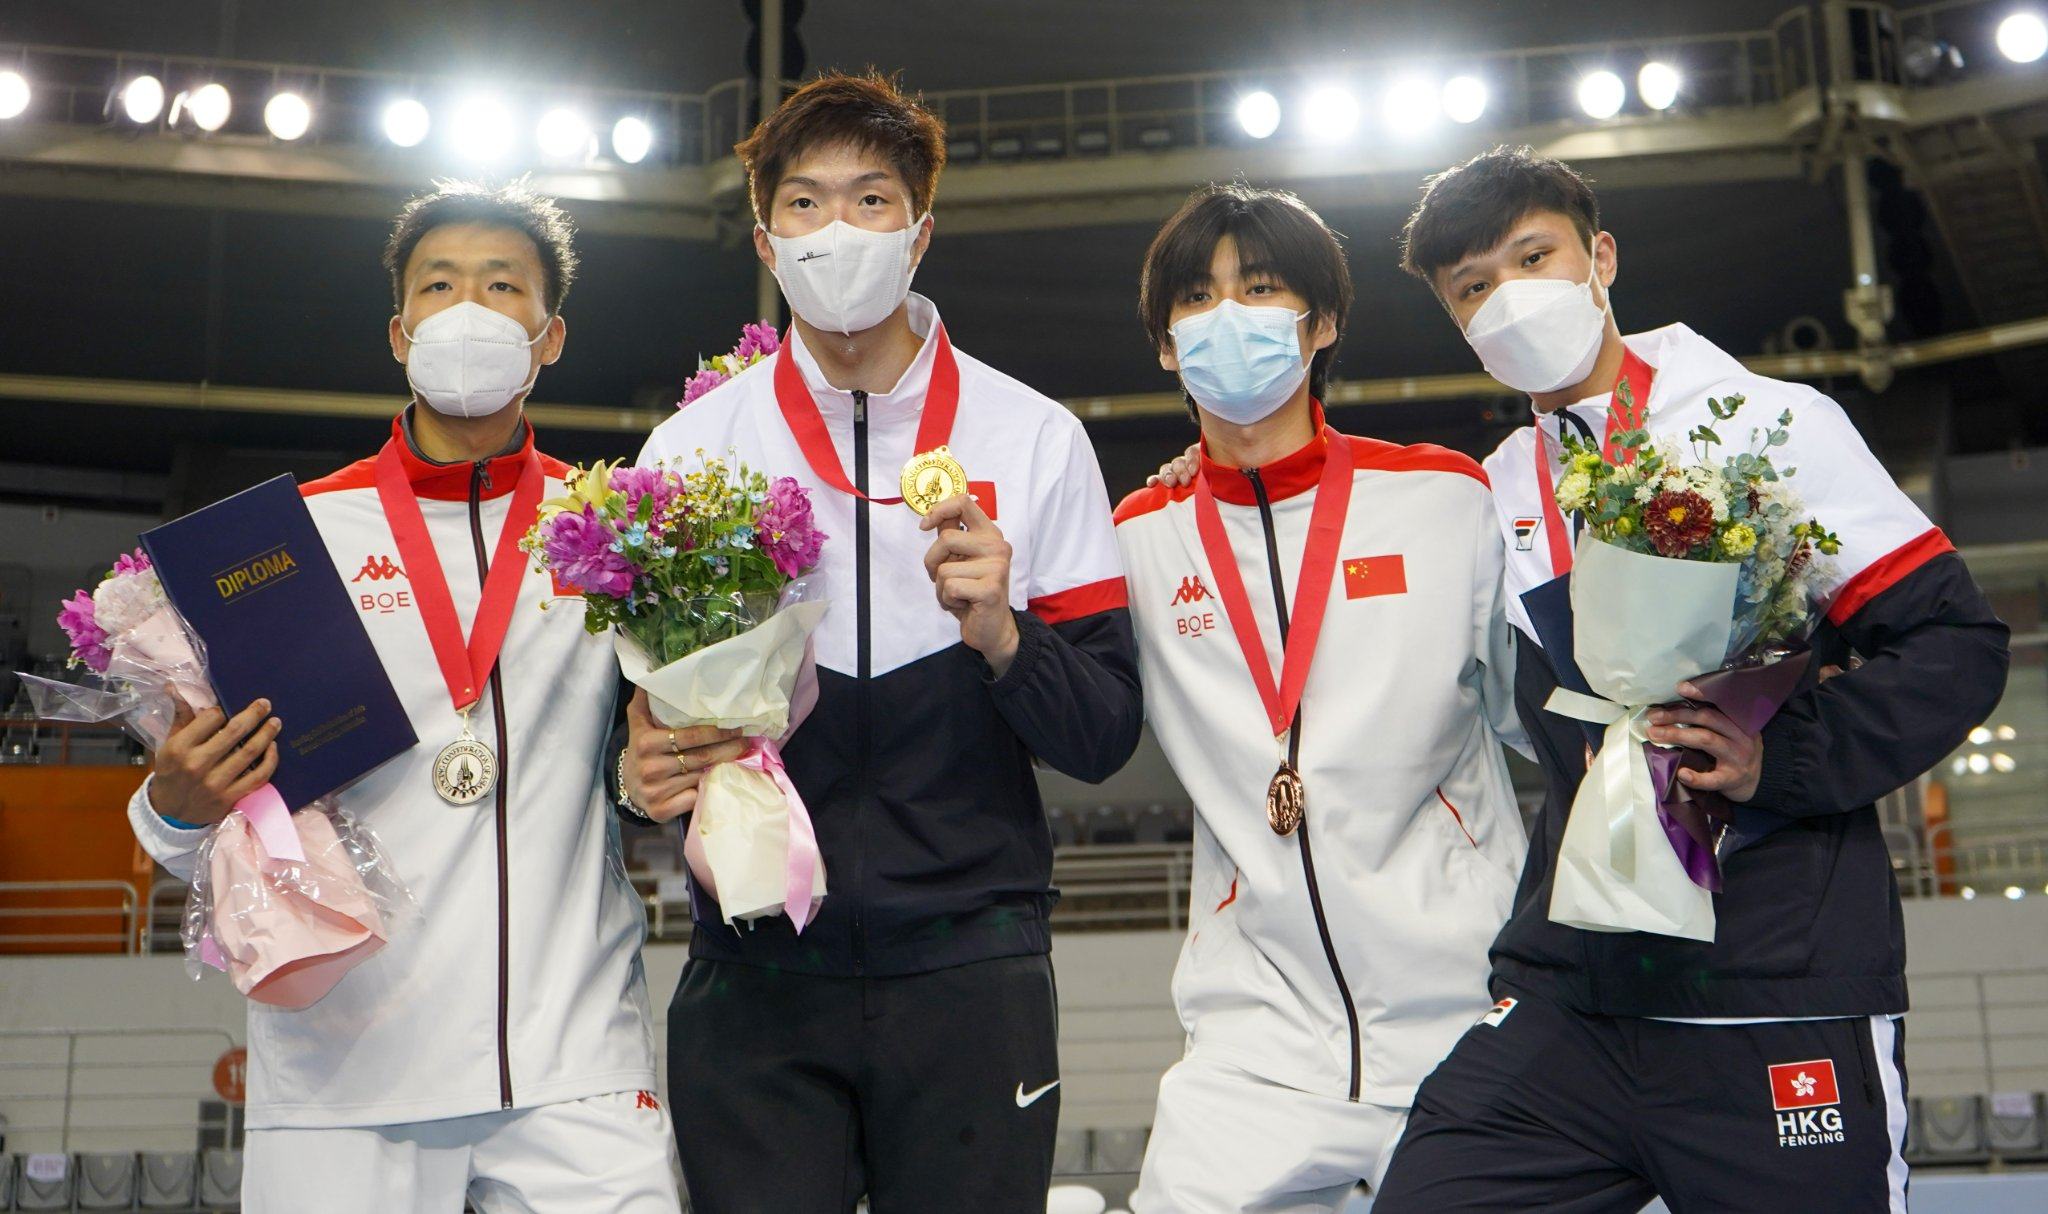 Cheung Ka-long (front) and Ryan Choi (far right) dominate the podium for Hong Kong at the Asian Championships. Photo: FIE